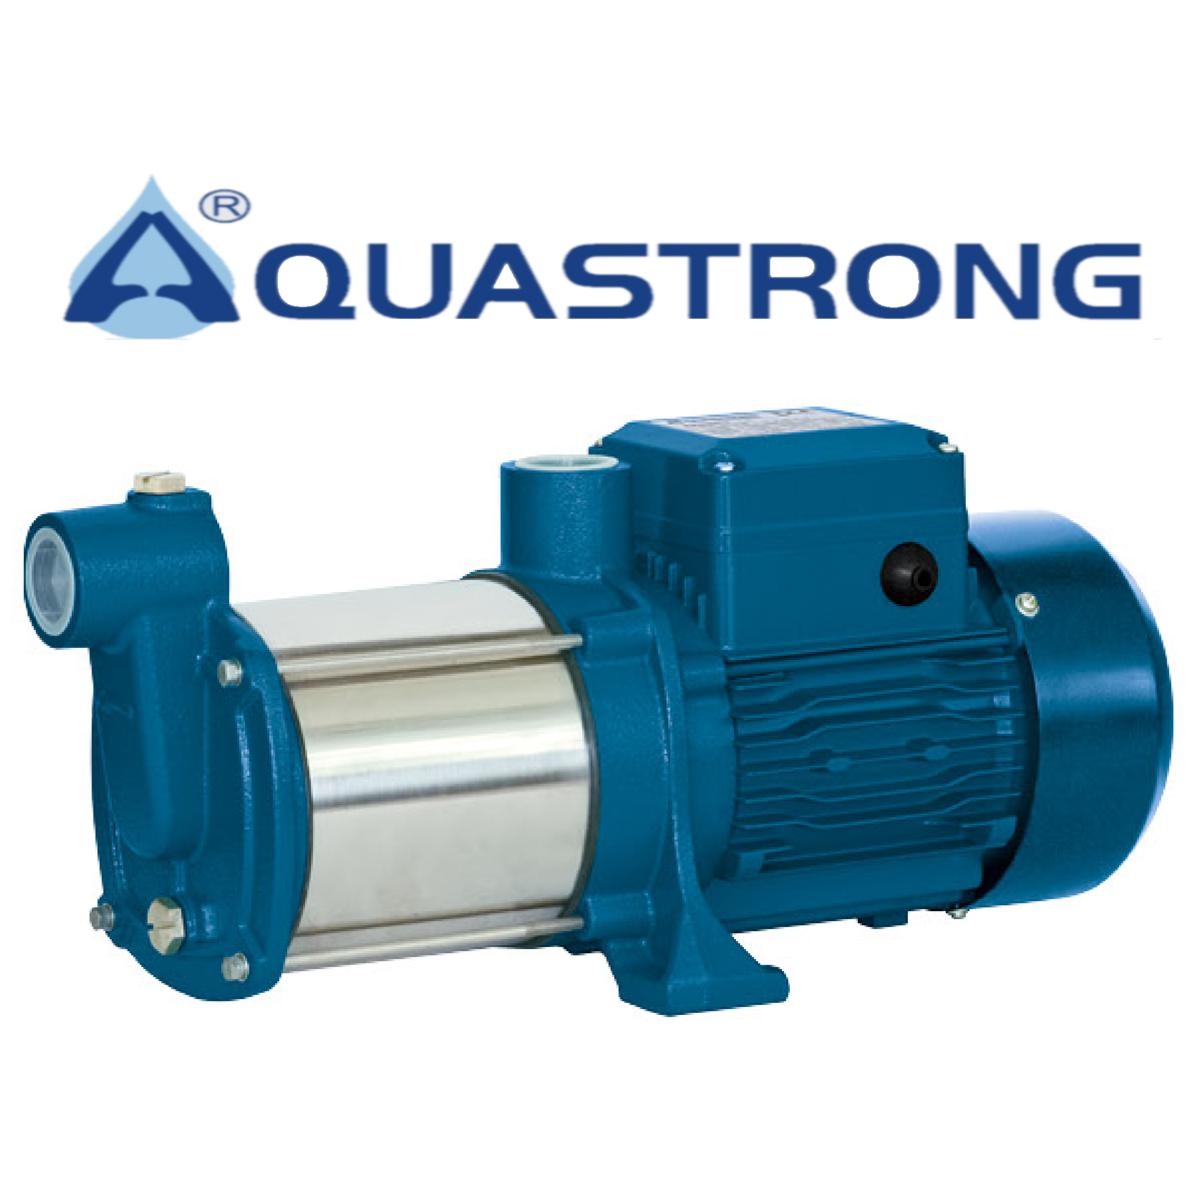 Aquastrong - 4ECSM100S - 750W - Multistage Centrifugal Pump